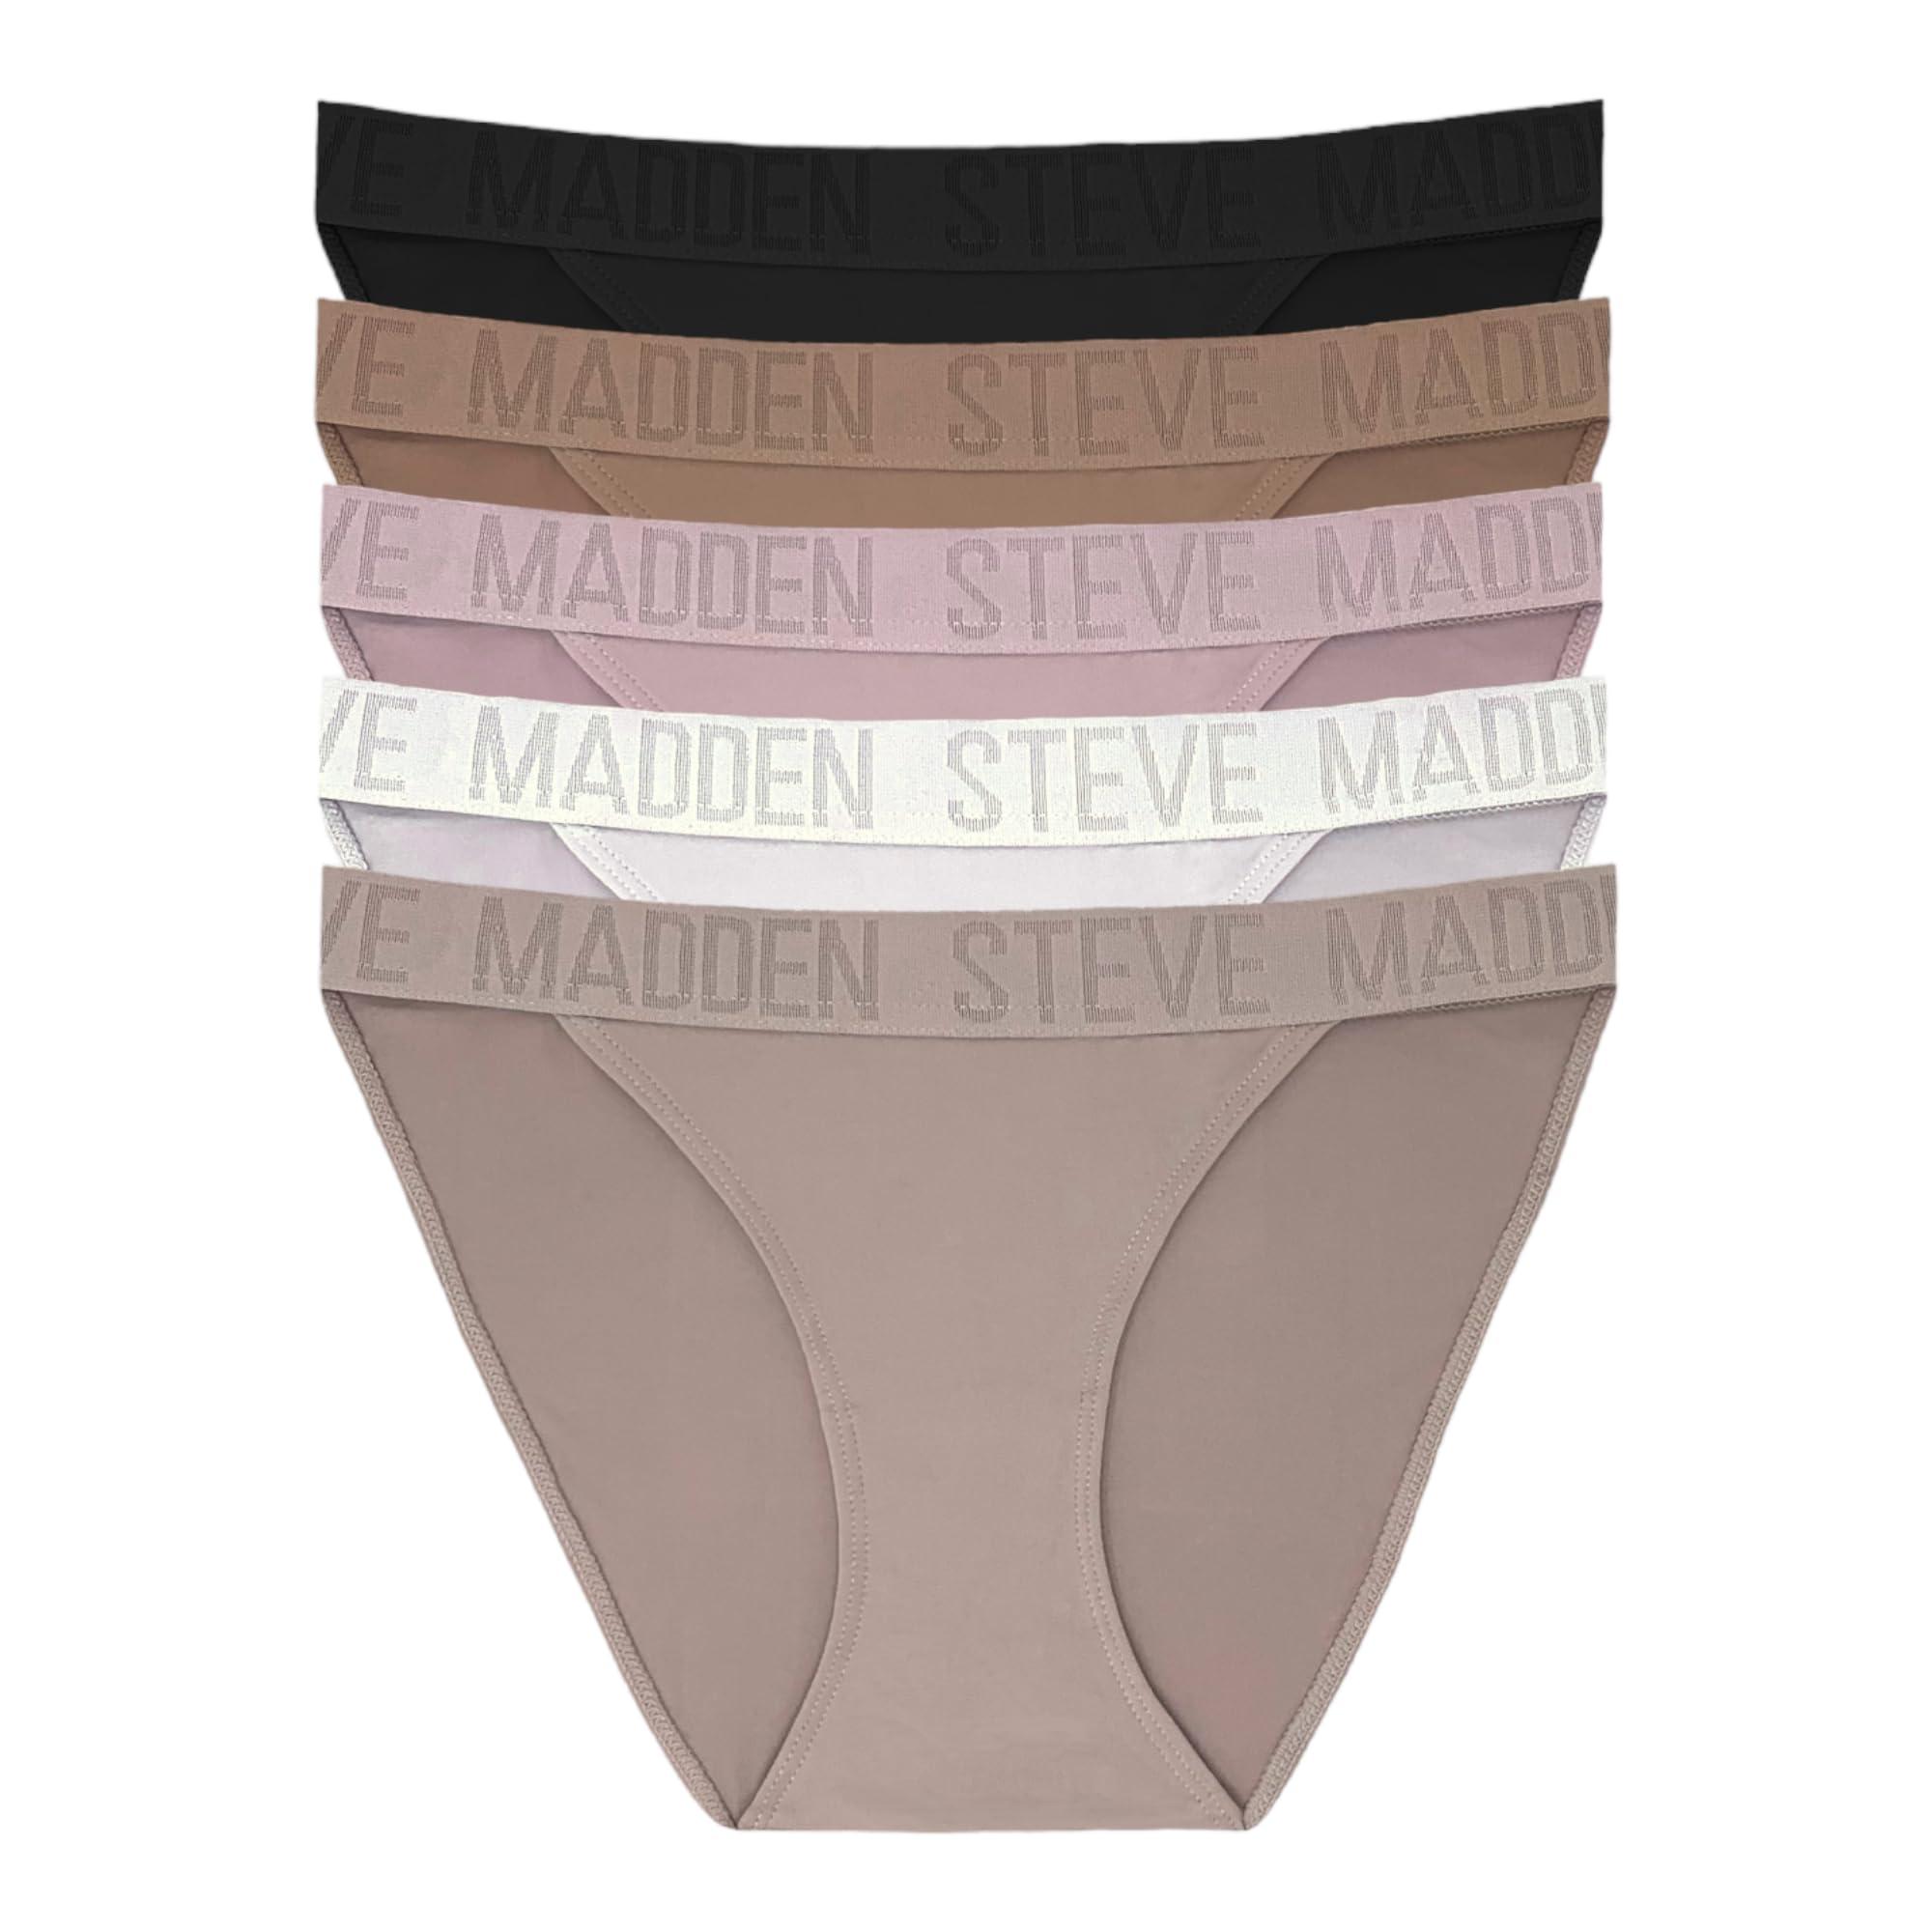 Steve Madden Logo Tanga Panty 5 Pack in Brown